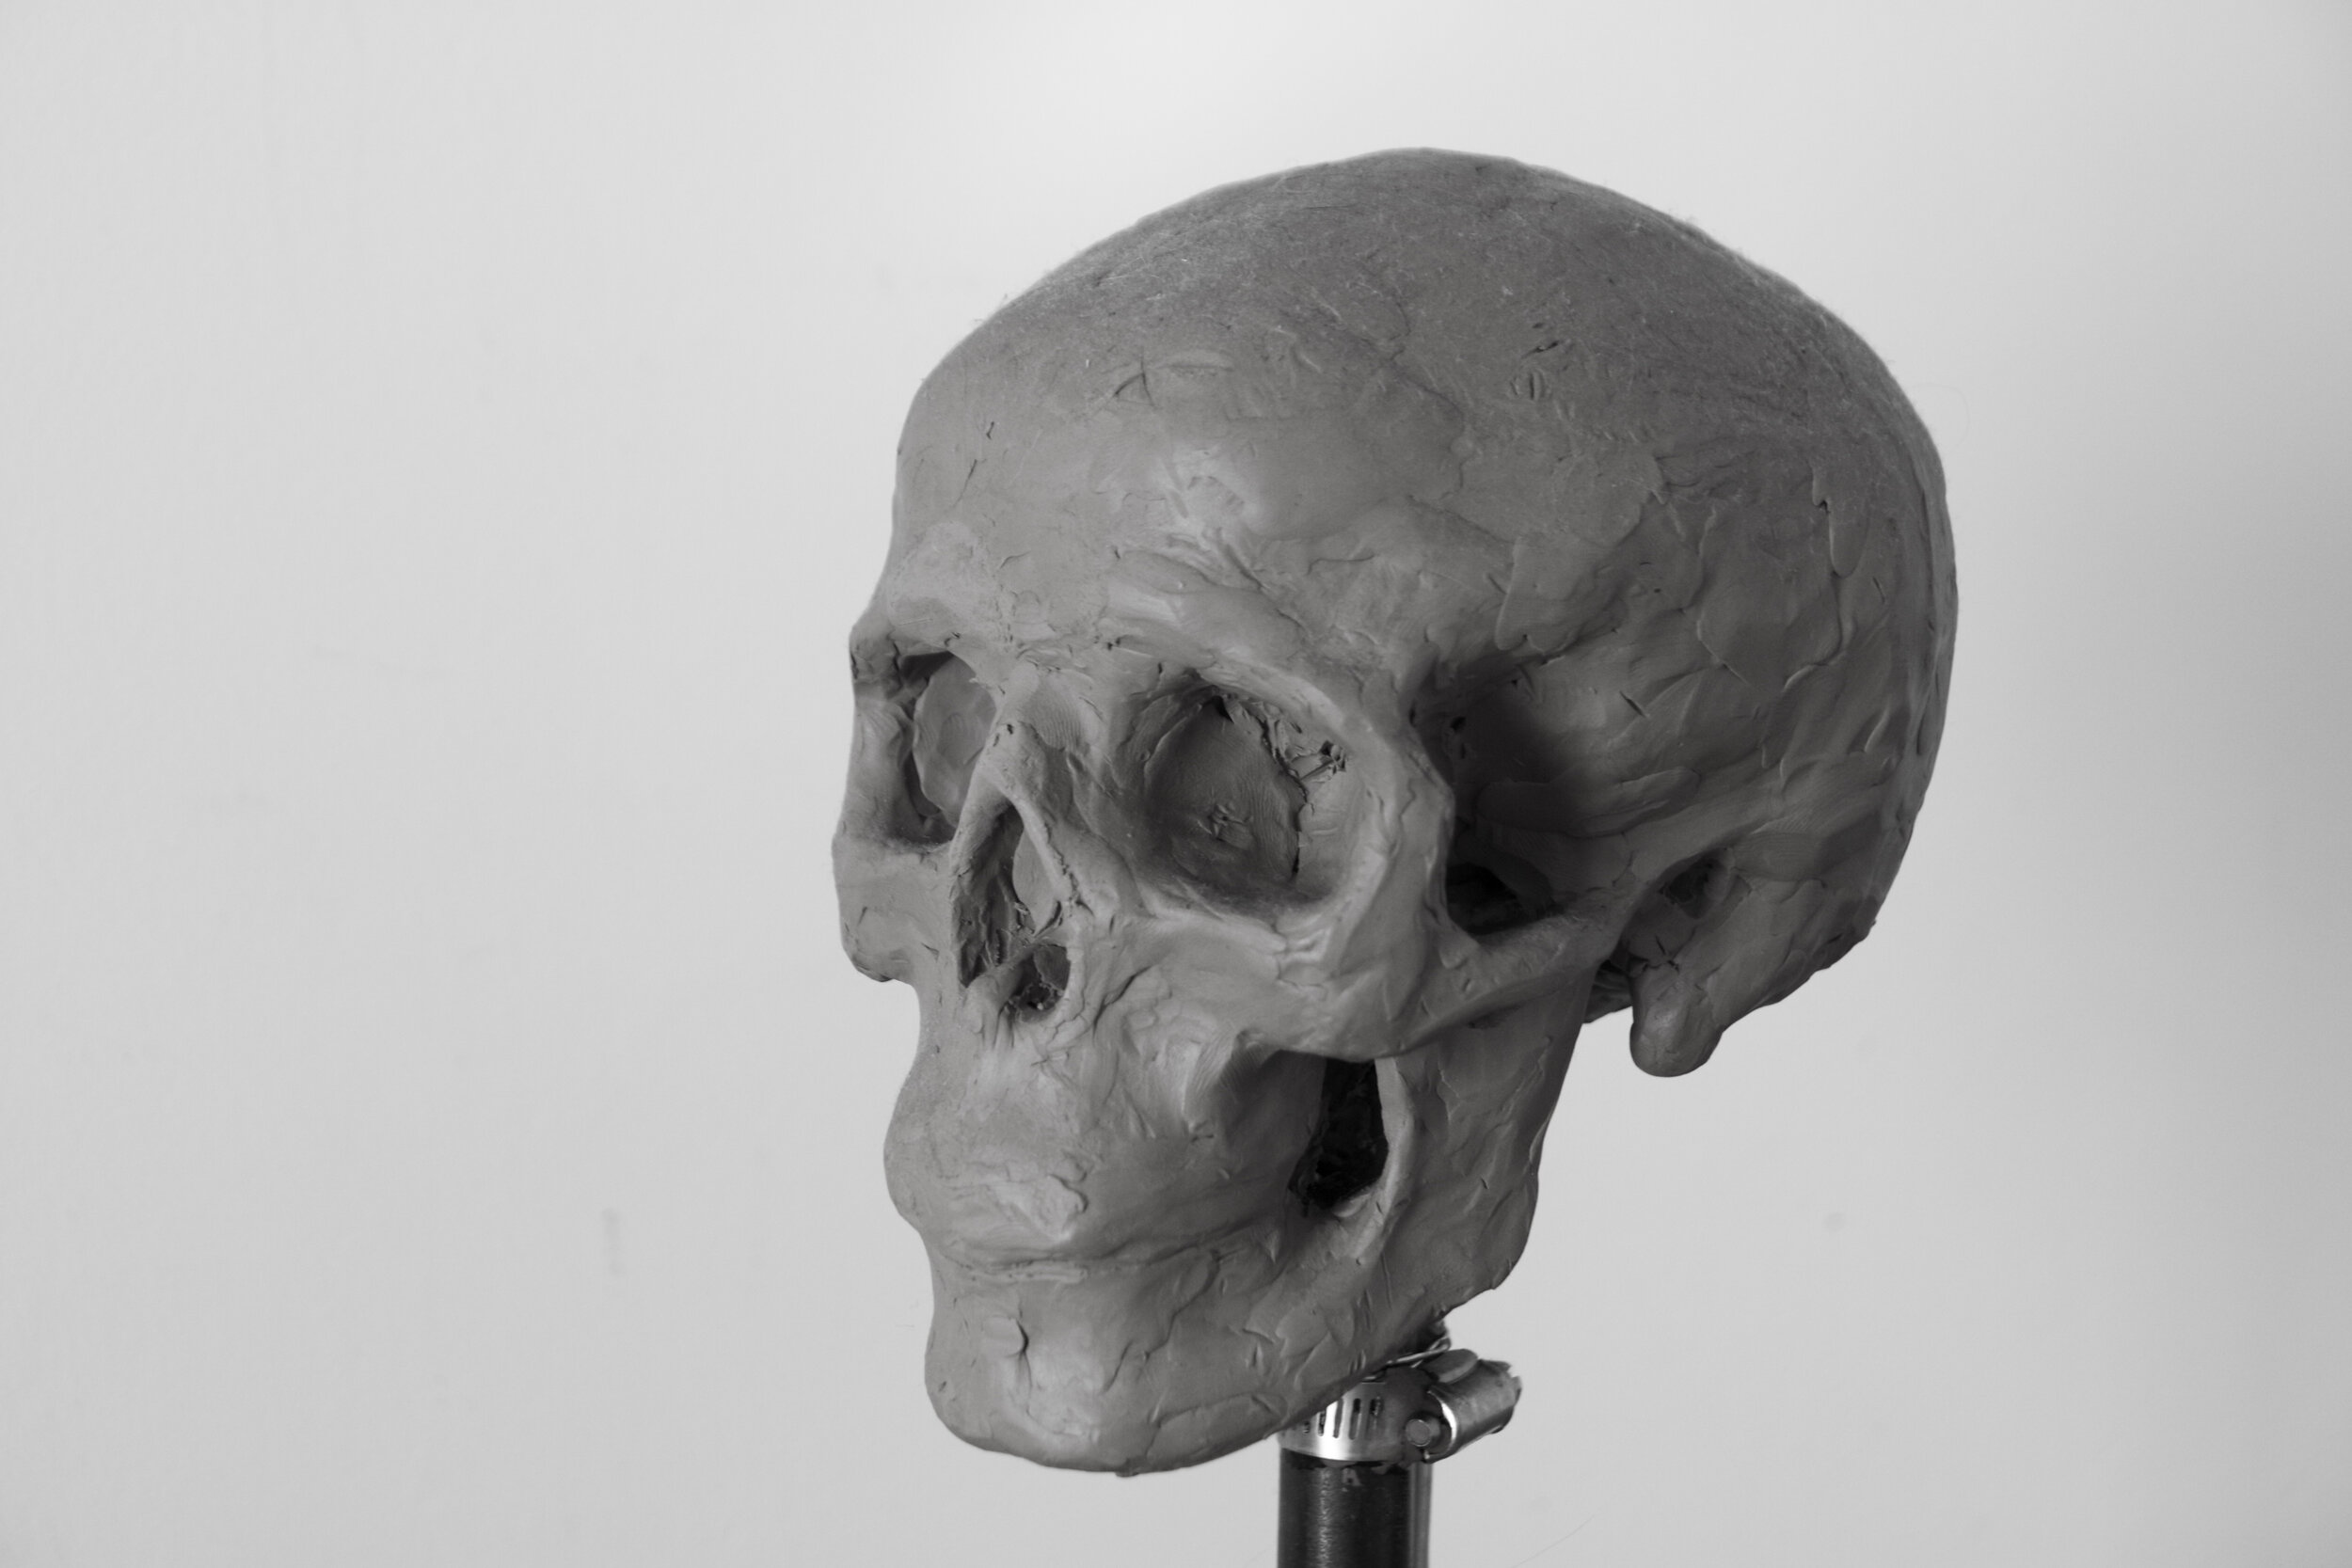 skull sculpture 2 by david golann (iphoto edit-high quality).jpg